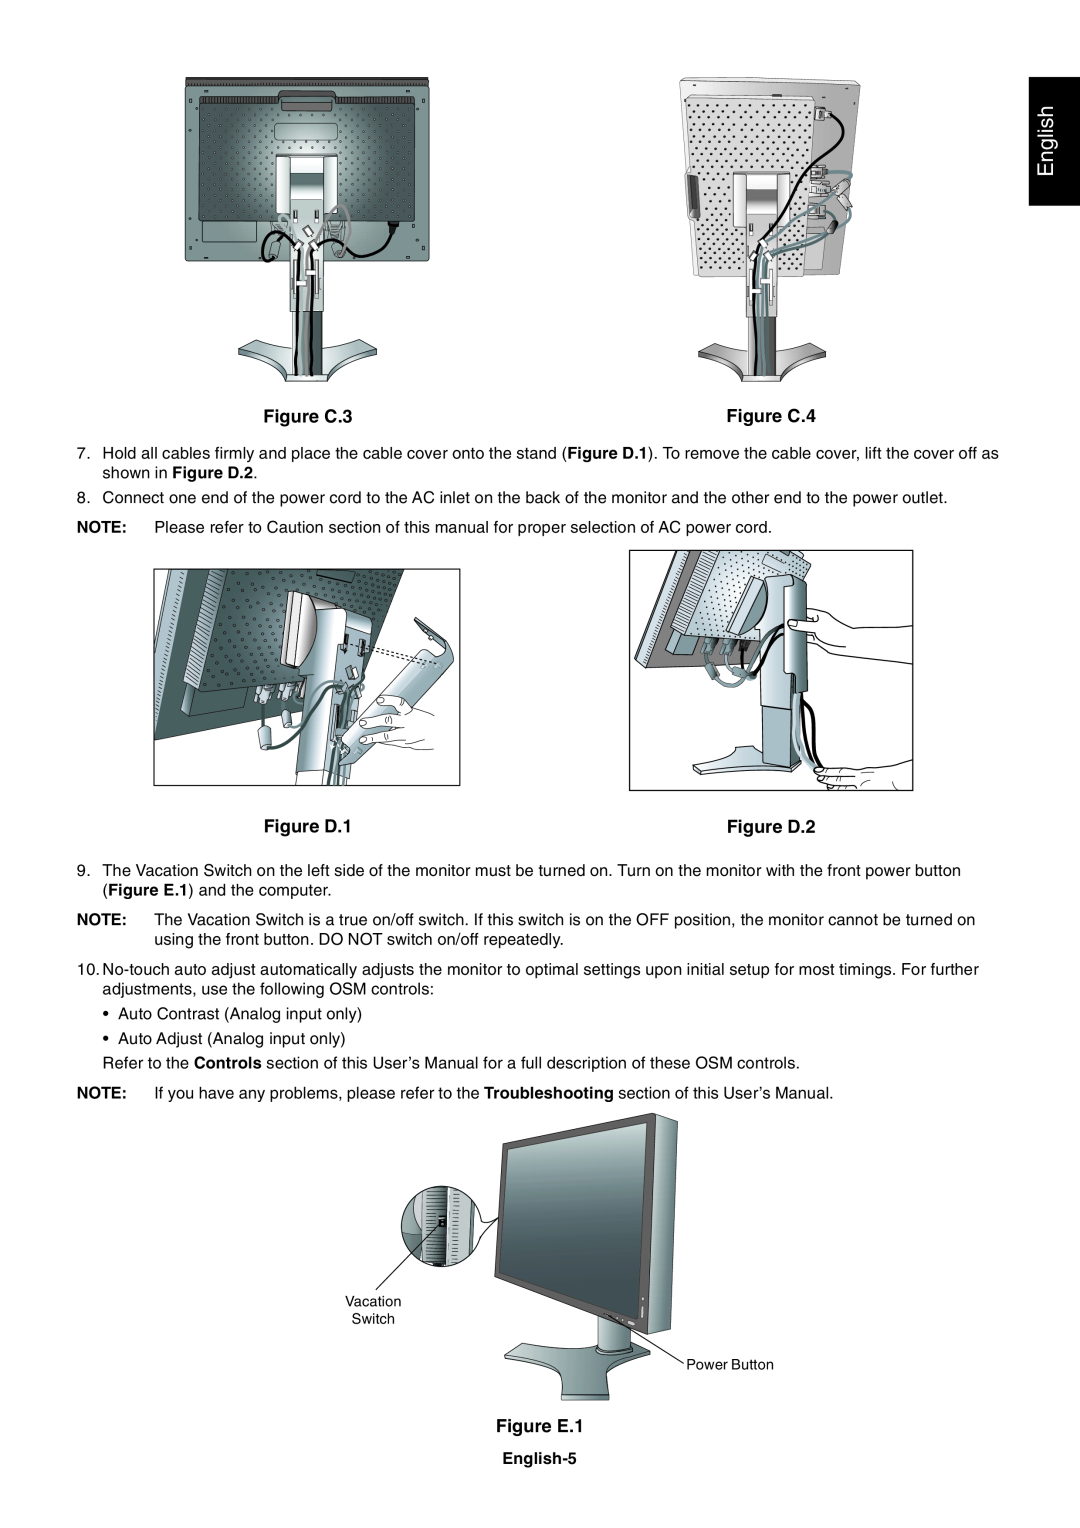 NEC LCD2690WUXi user manual English, Figure C.3, Figure C.4, Figure D.1, Figure D.2, Figure E.1 